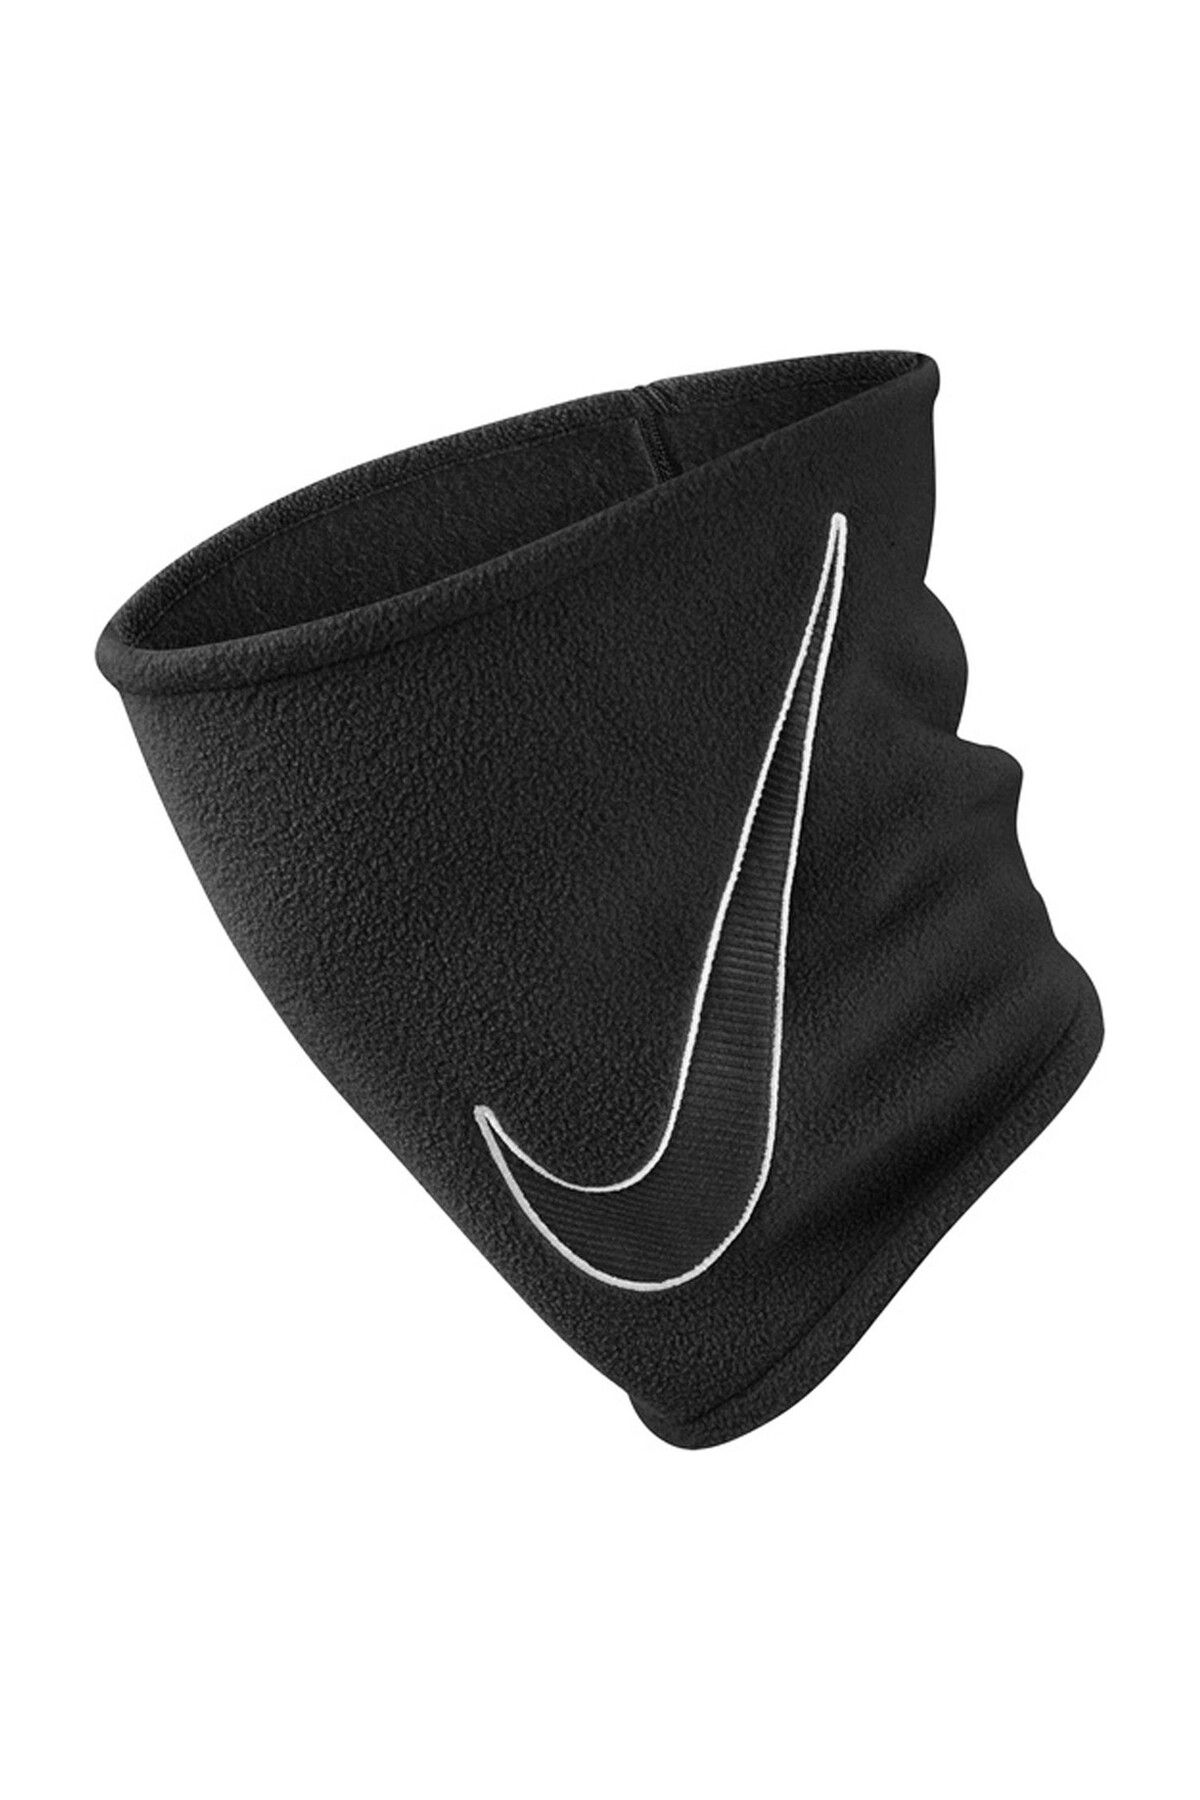 Nike Fleece Neckwarmer 2.0 Black/white Osfm, One Size/5